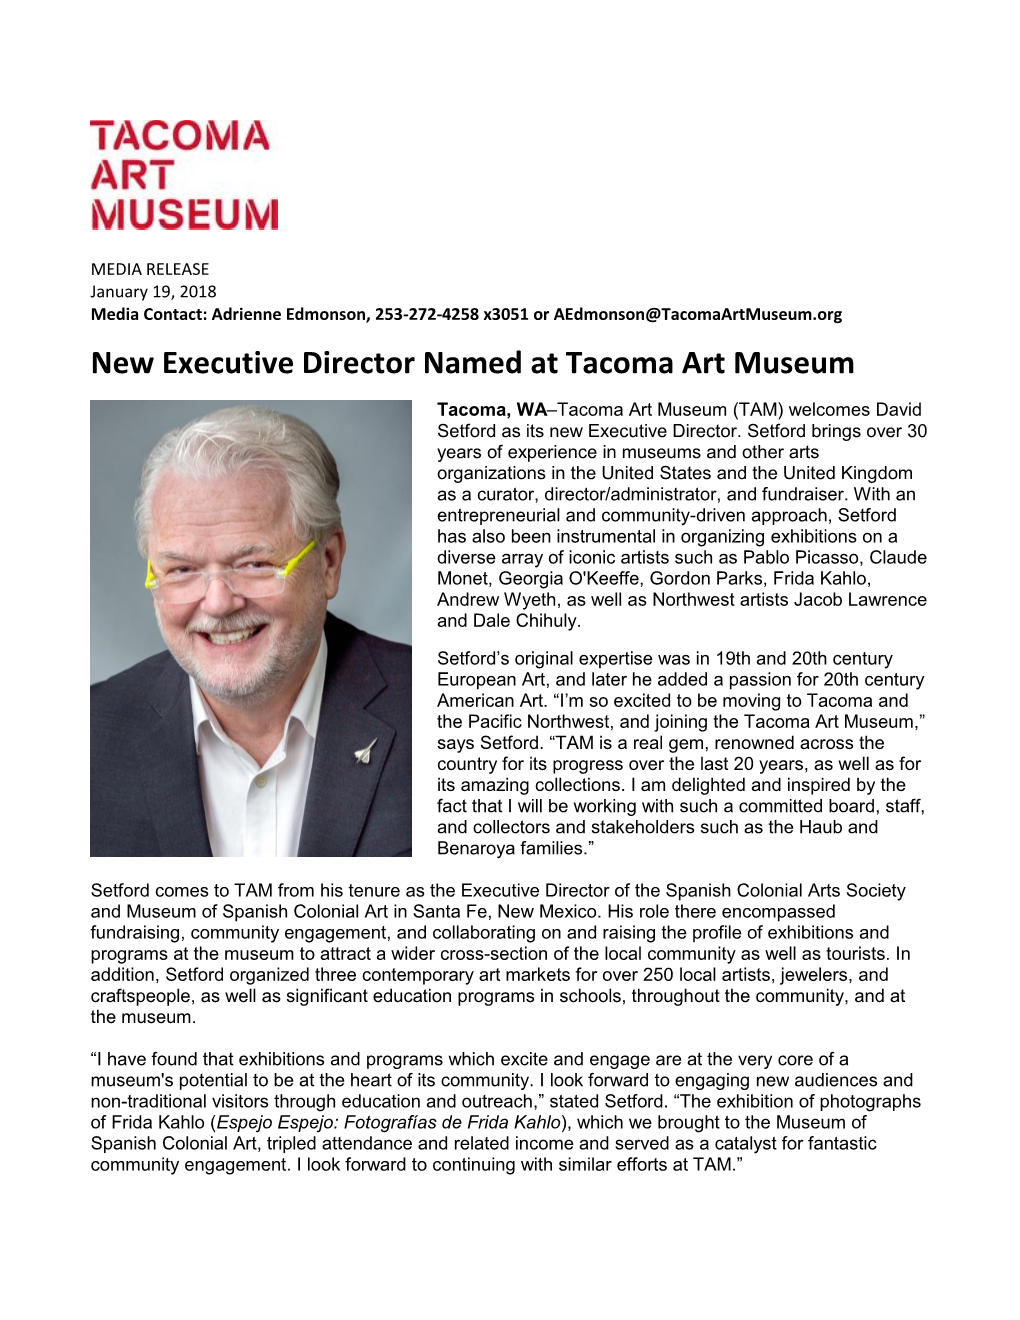 New Executive Director Named at Tacoma Art Museum